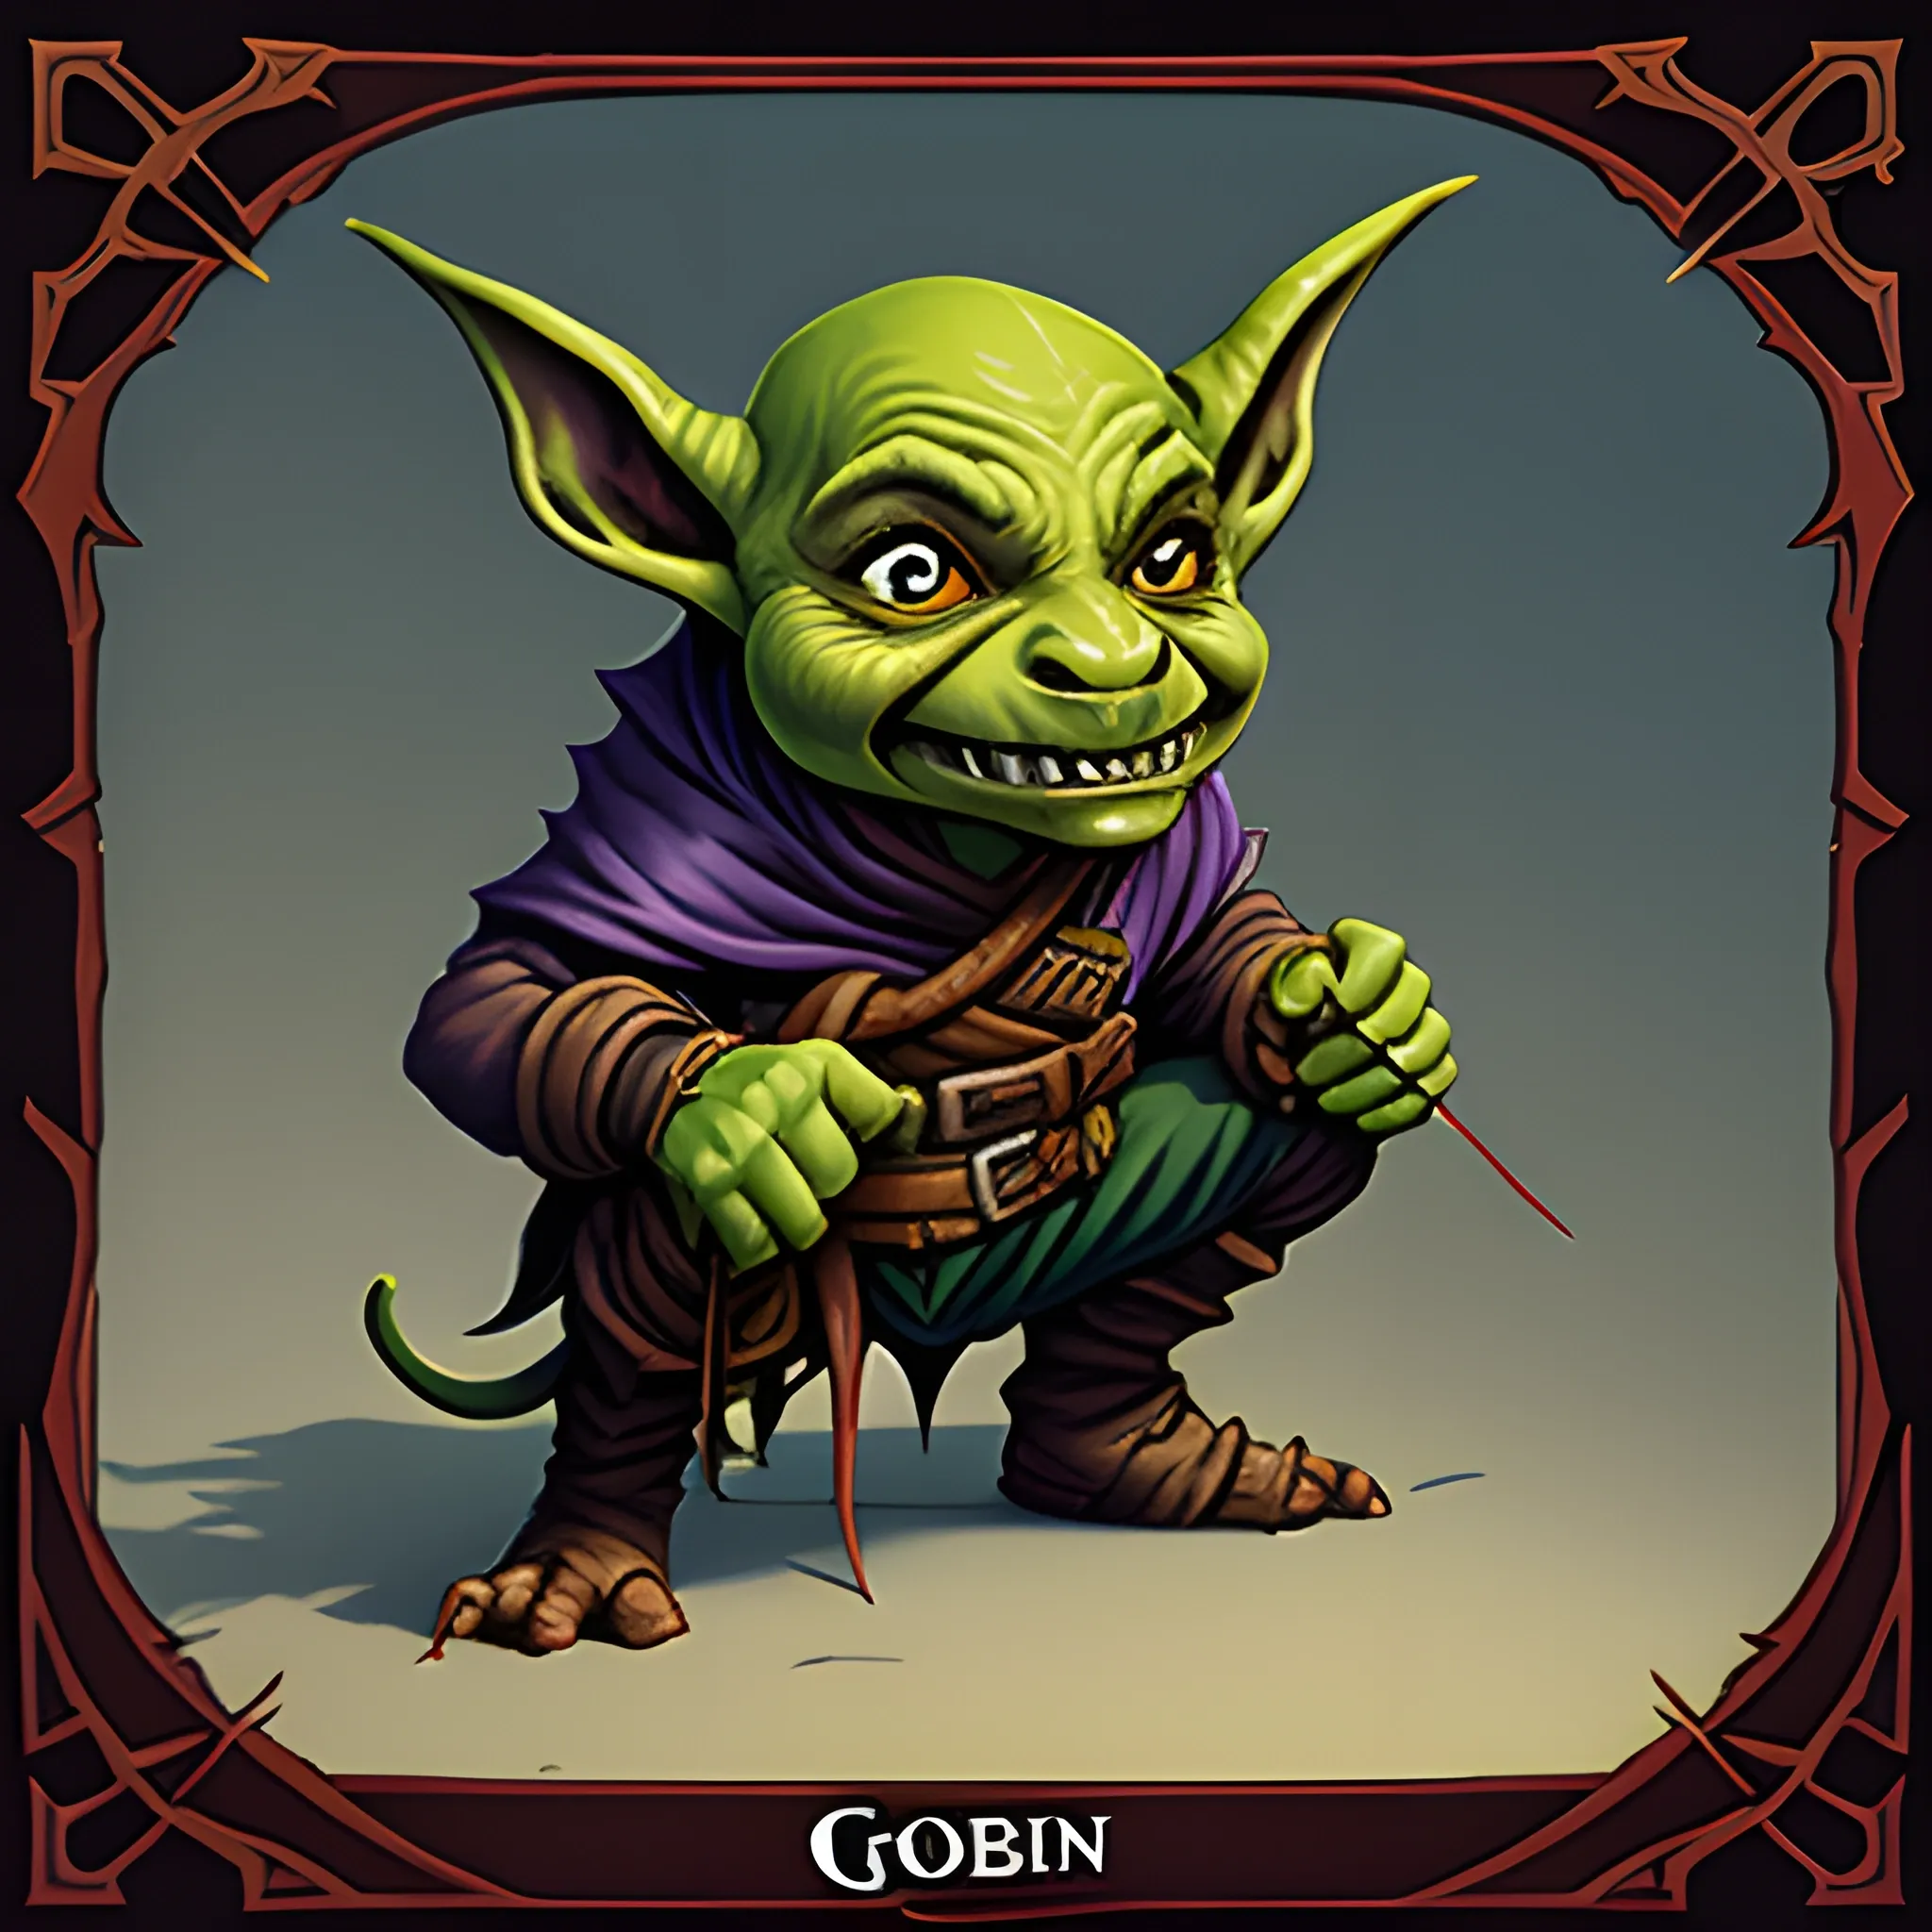 Magic the gathering art style, goblin rogue